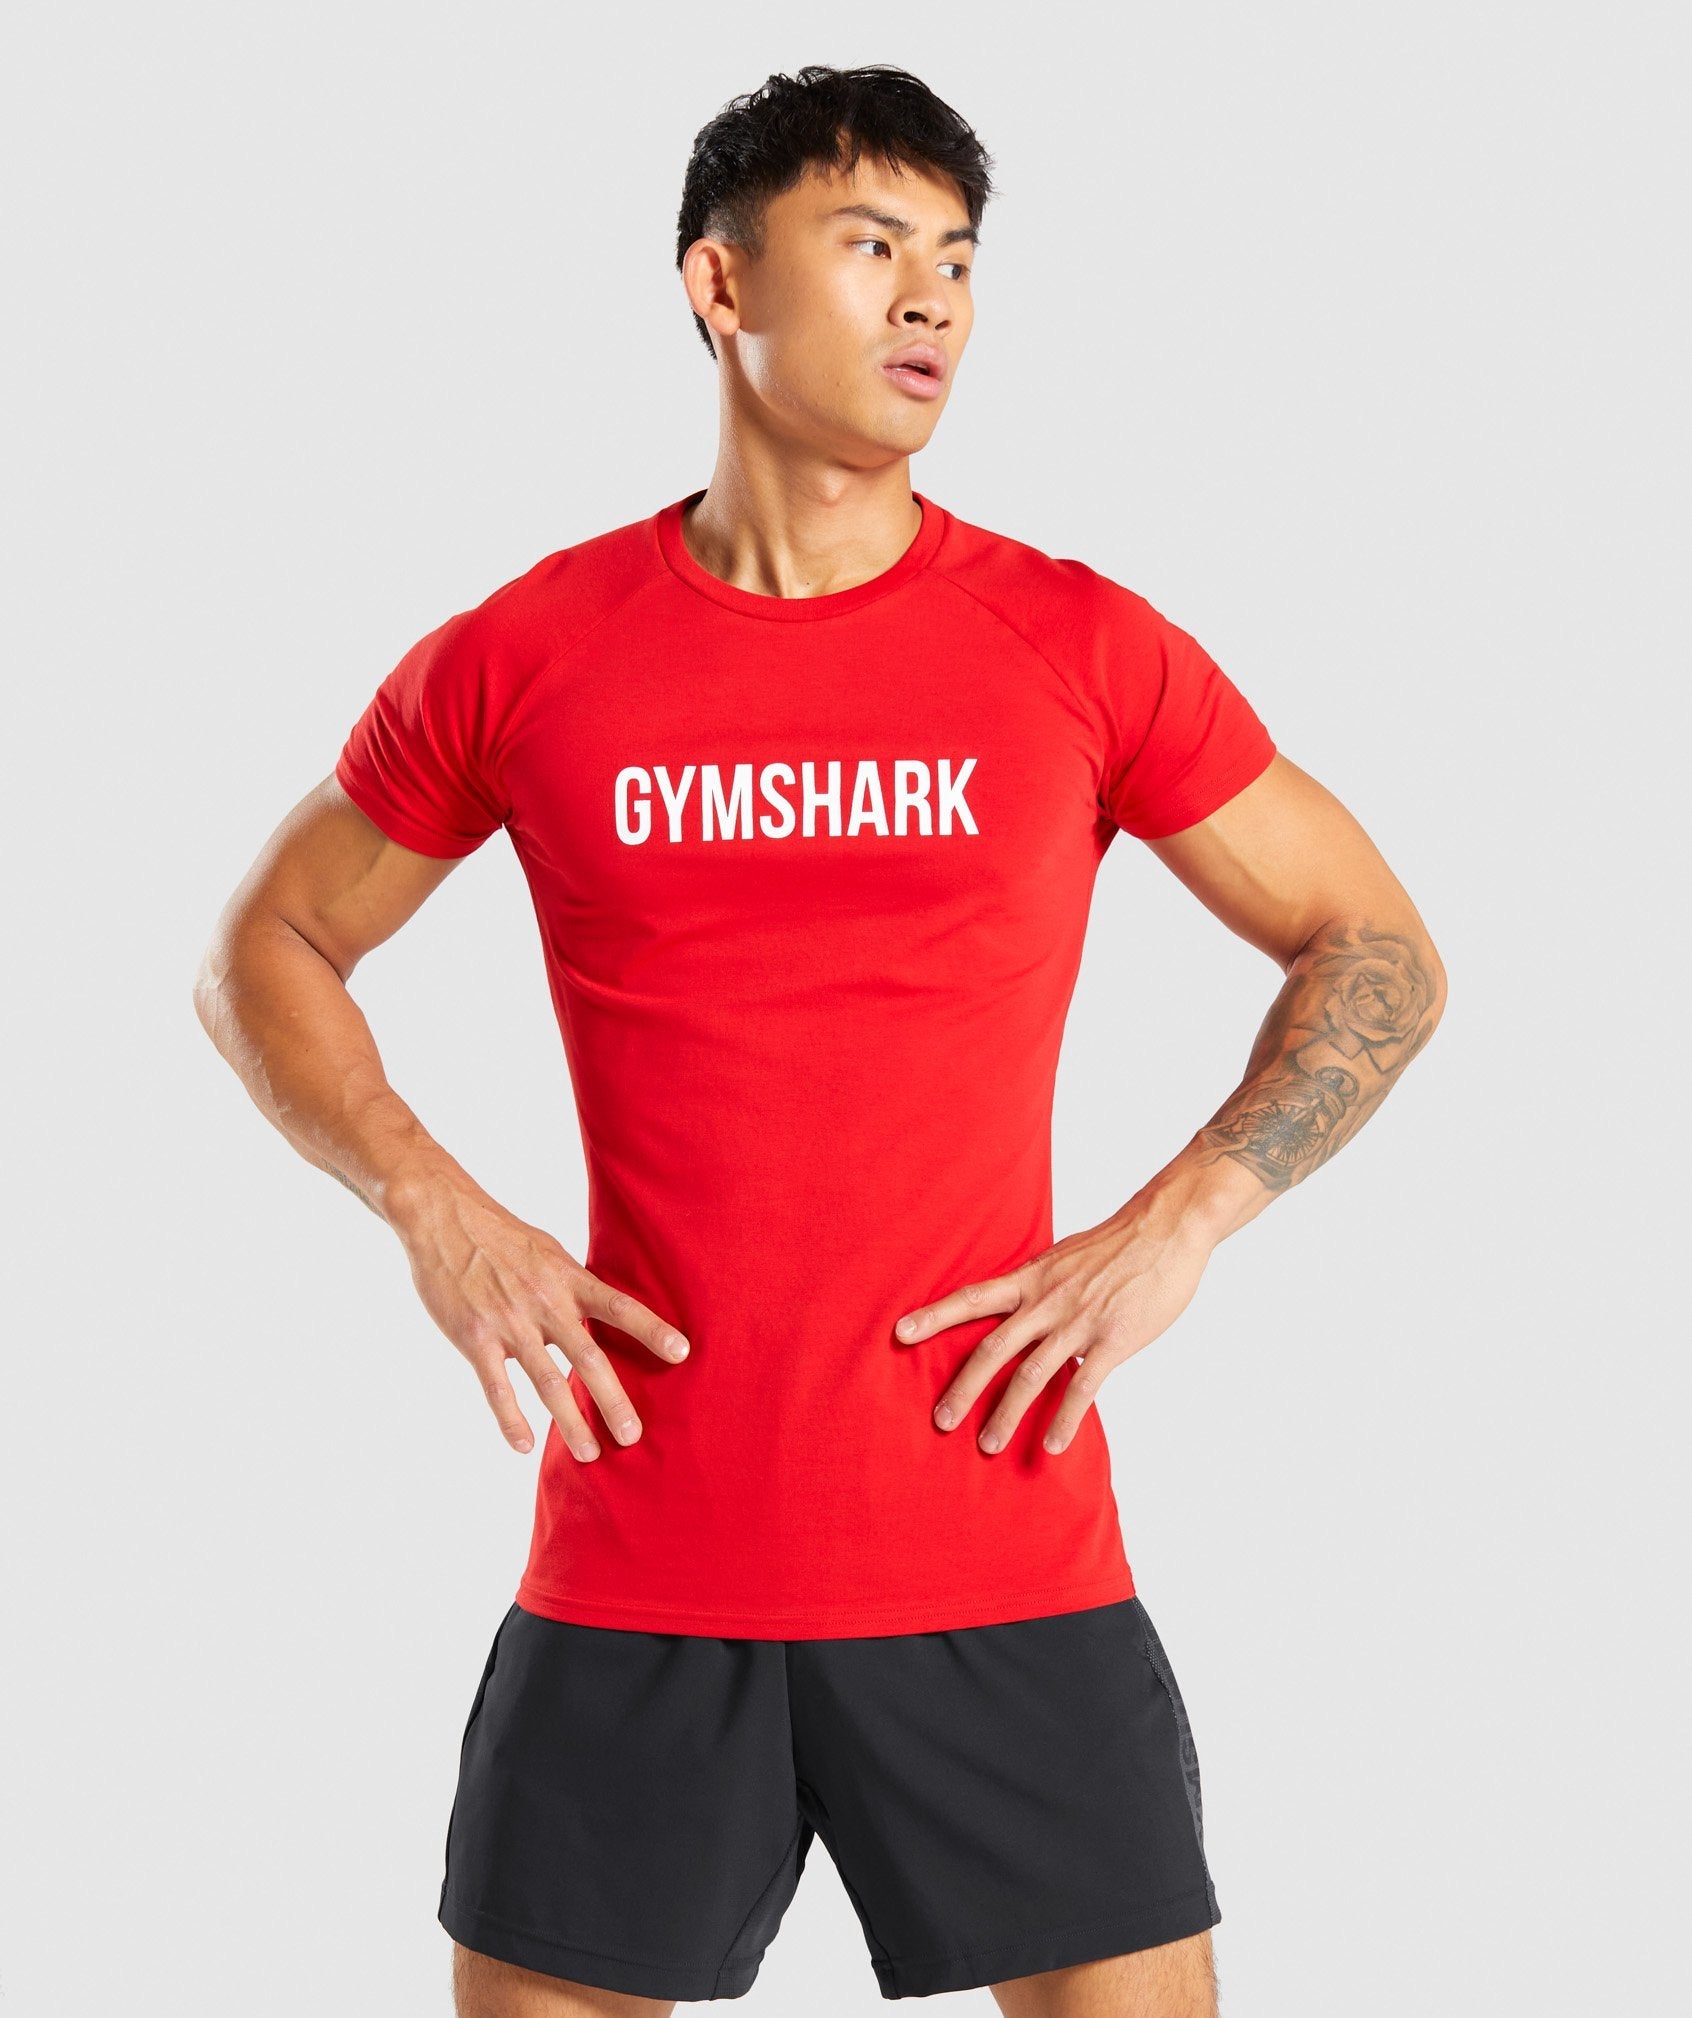 Gymshark Apollo T-Shirt - Red